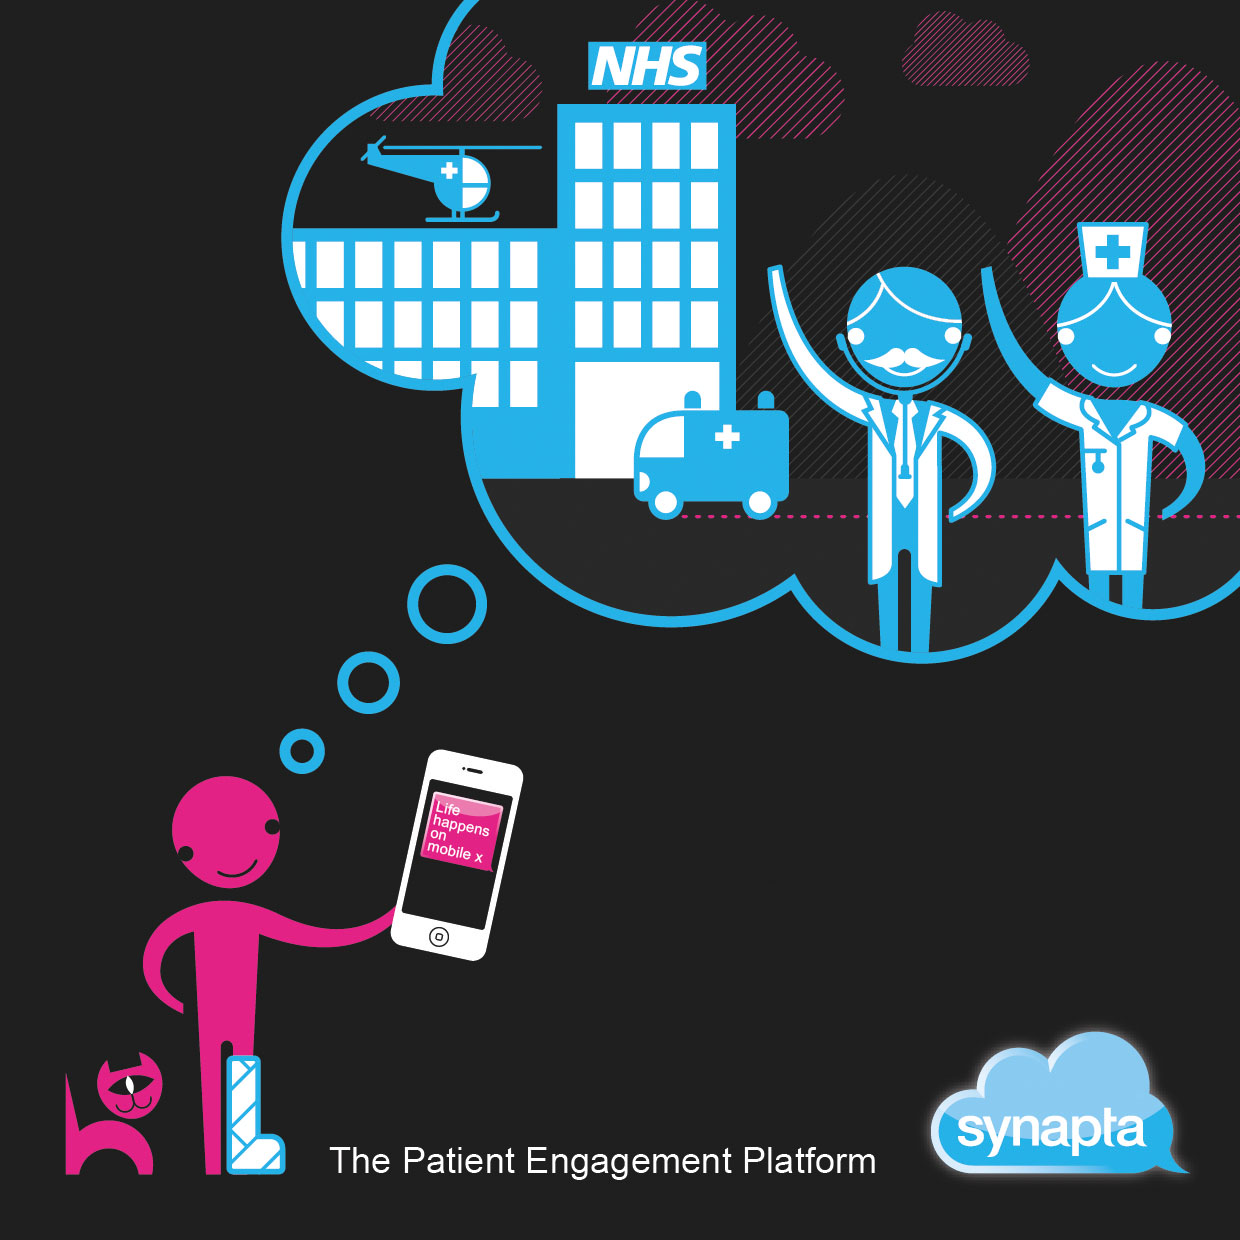 Synapta 'Patient Engagement Platform' NHS brochure cover